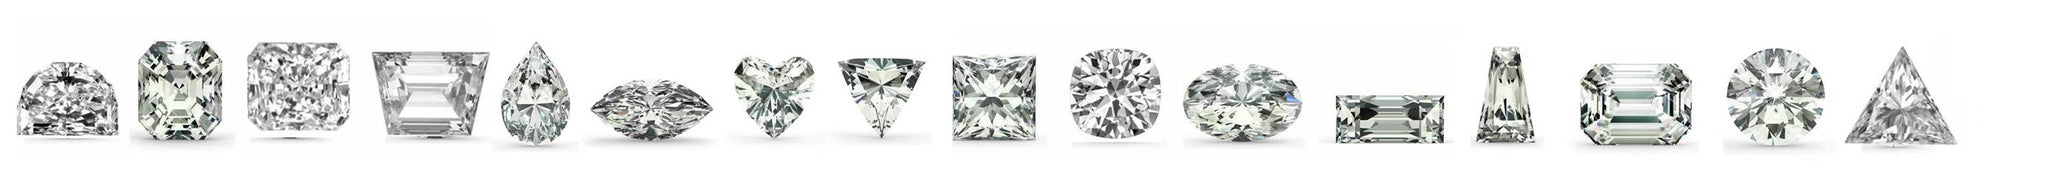 cubic zirconia versus diamond